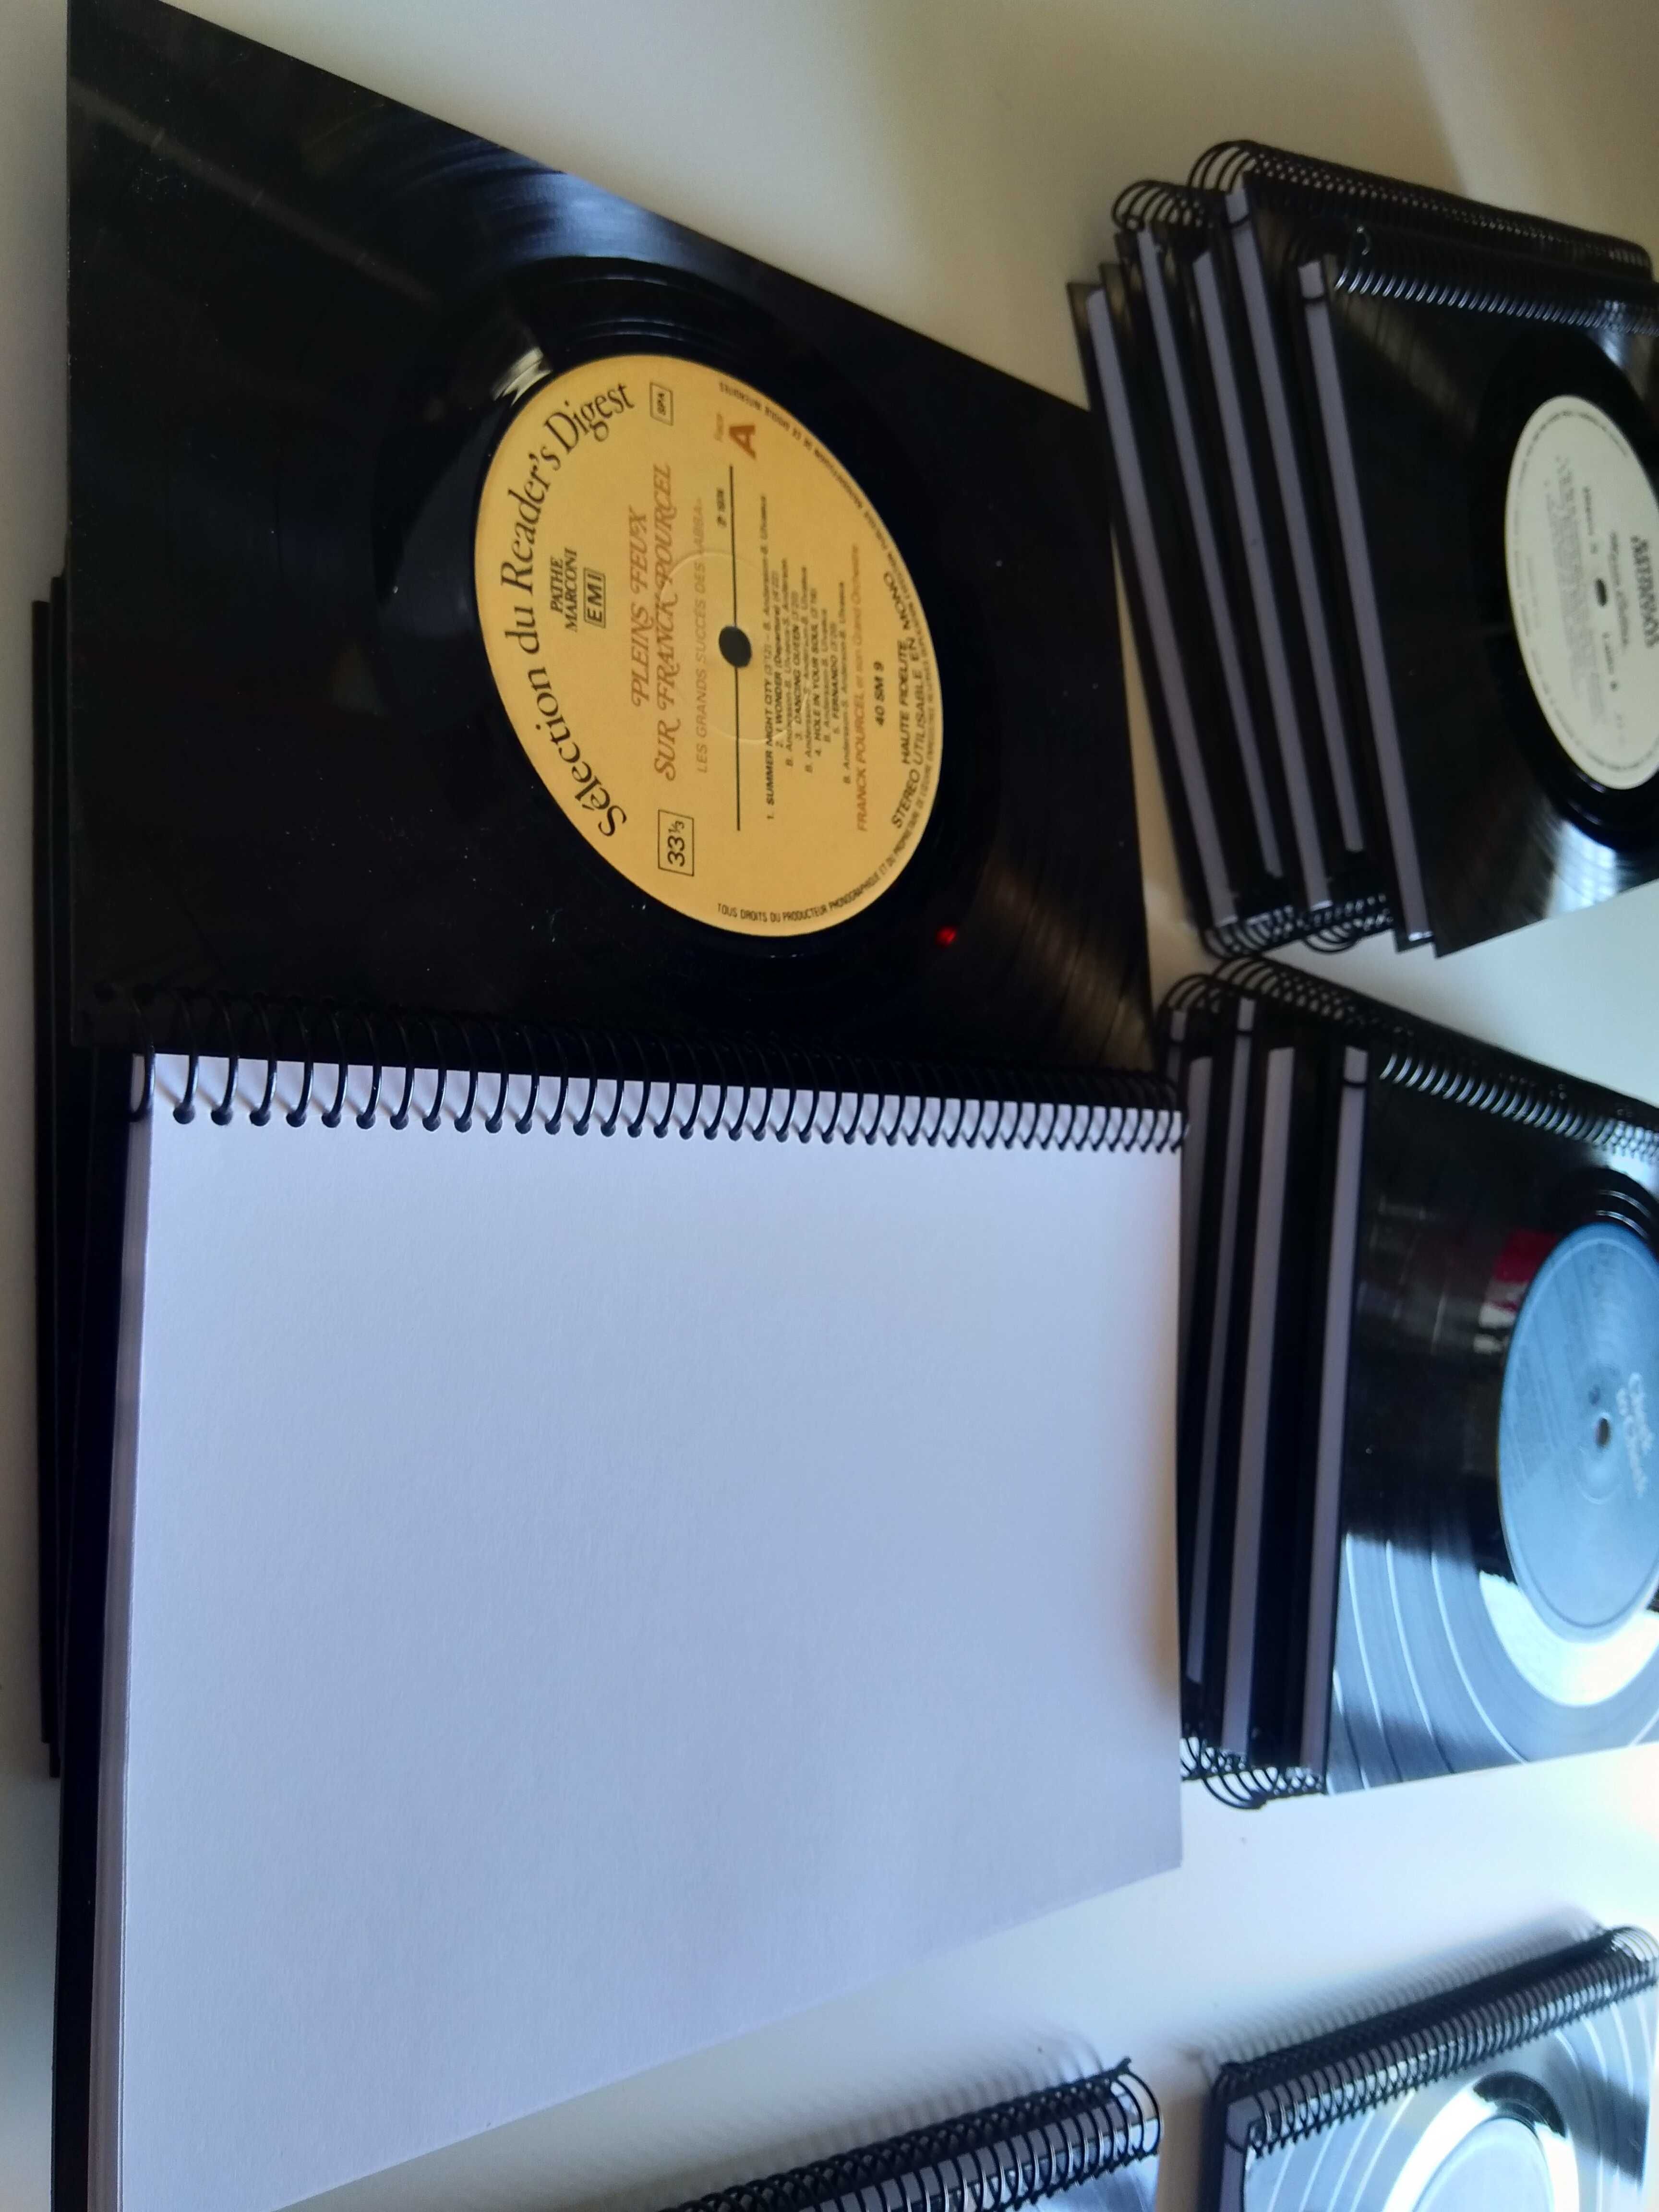 Cadernos com capas de discos de vinil, LP